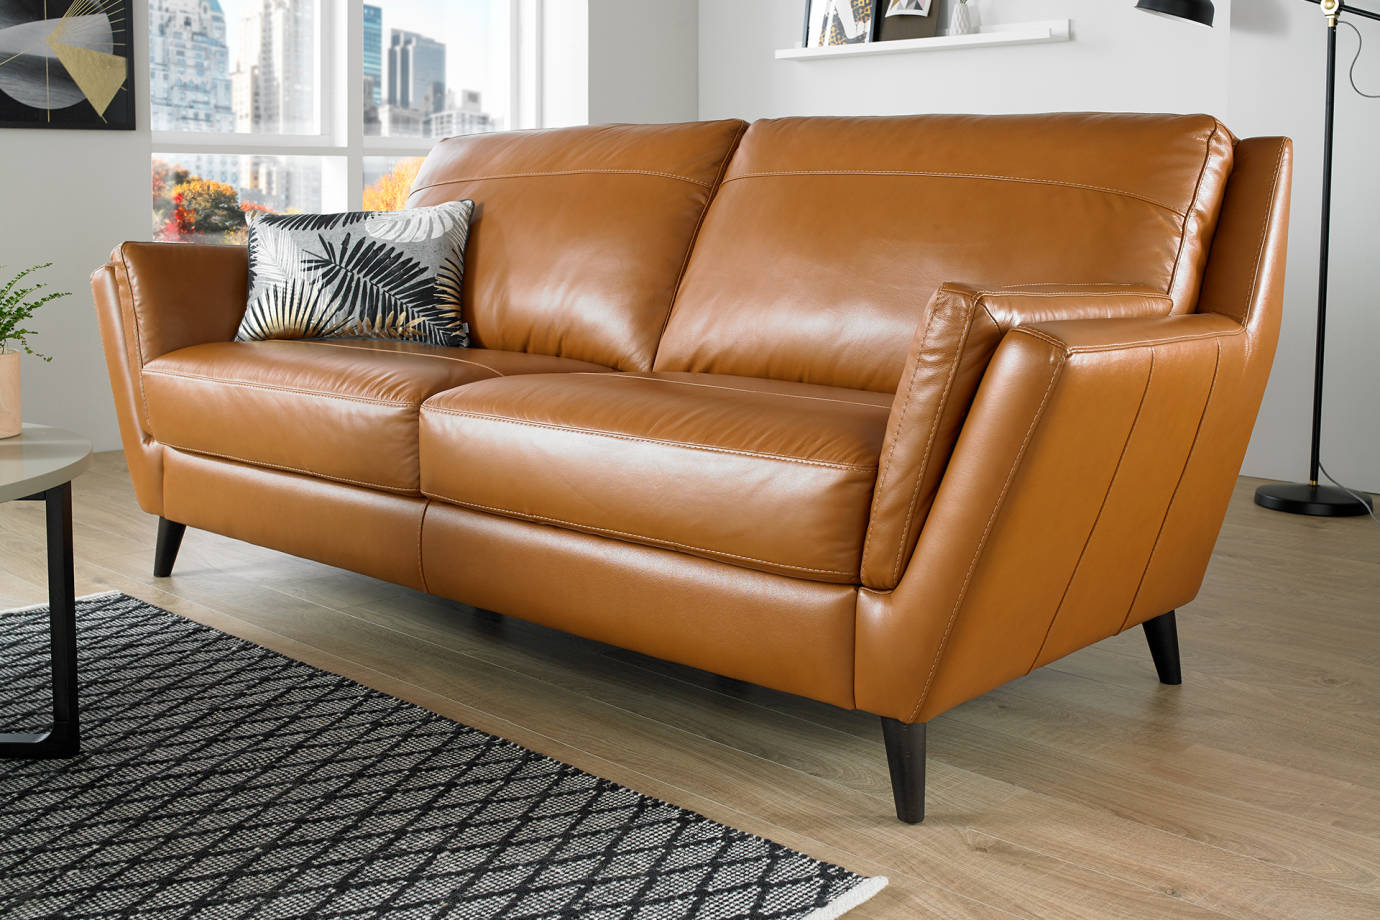 Leather Sofas Sofology, Compact Leather Sofa